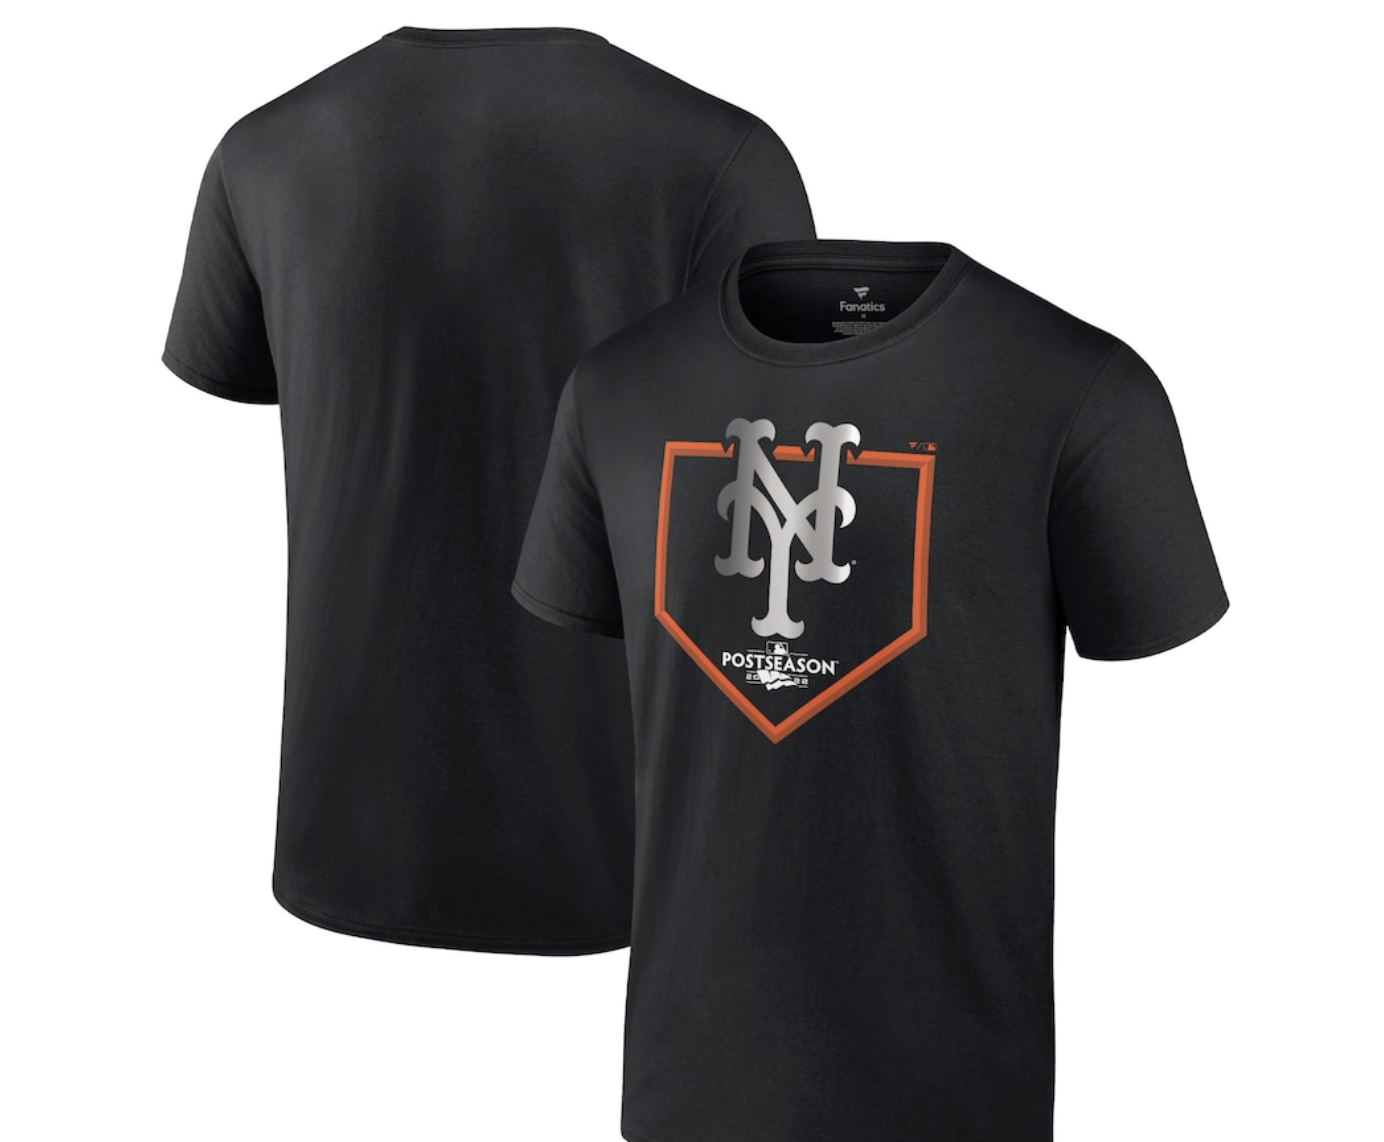 Hot New York Mets Made For October Mets Postseason Shirt - Wiseabe